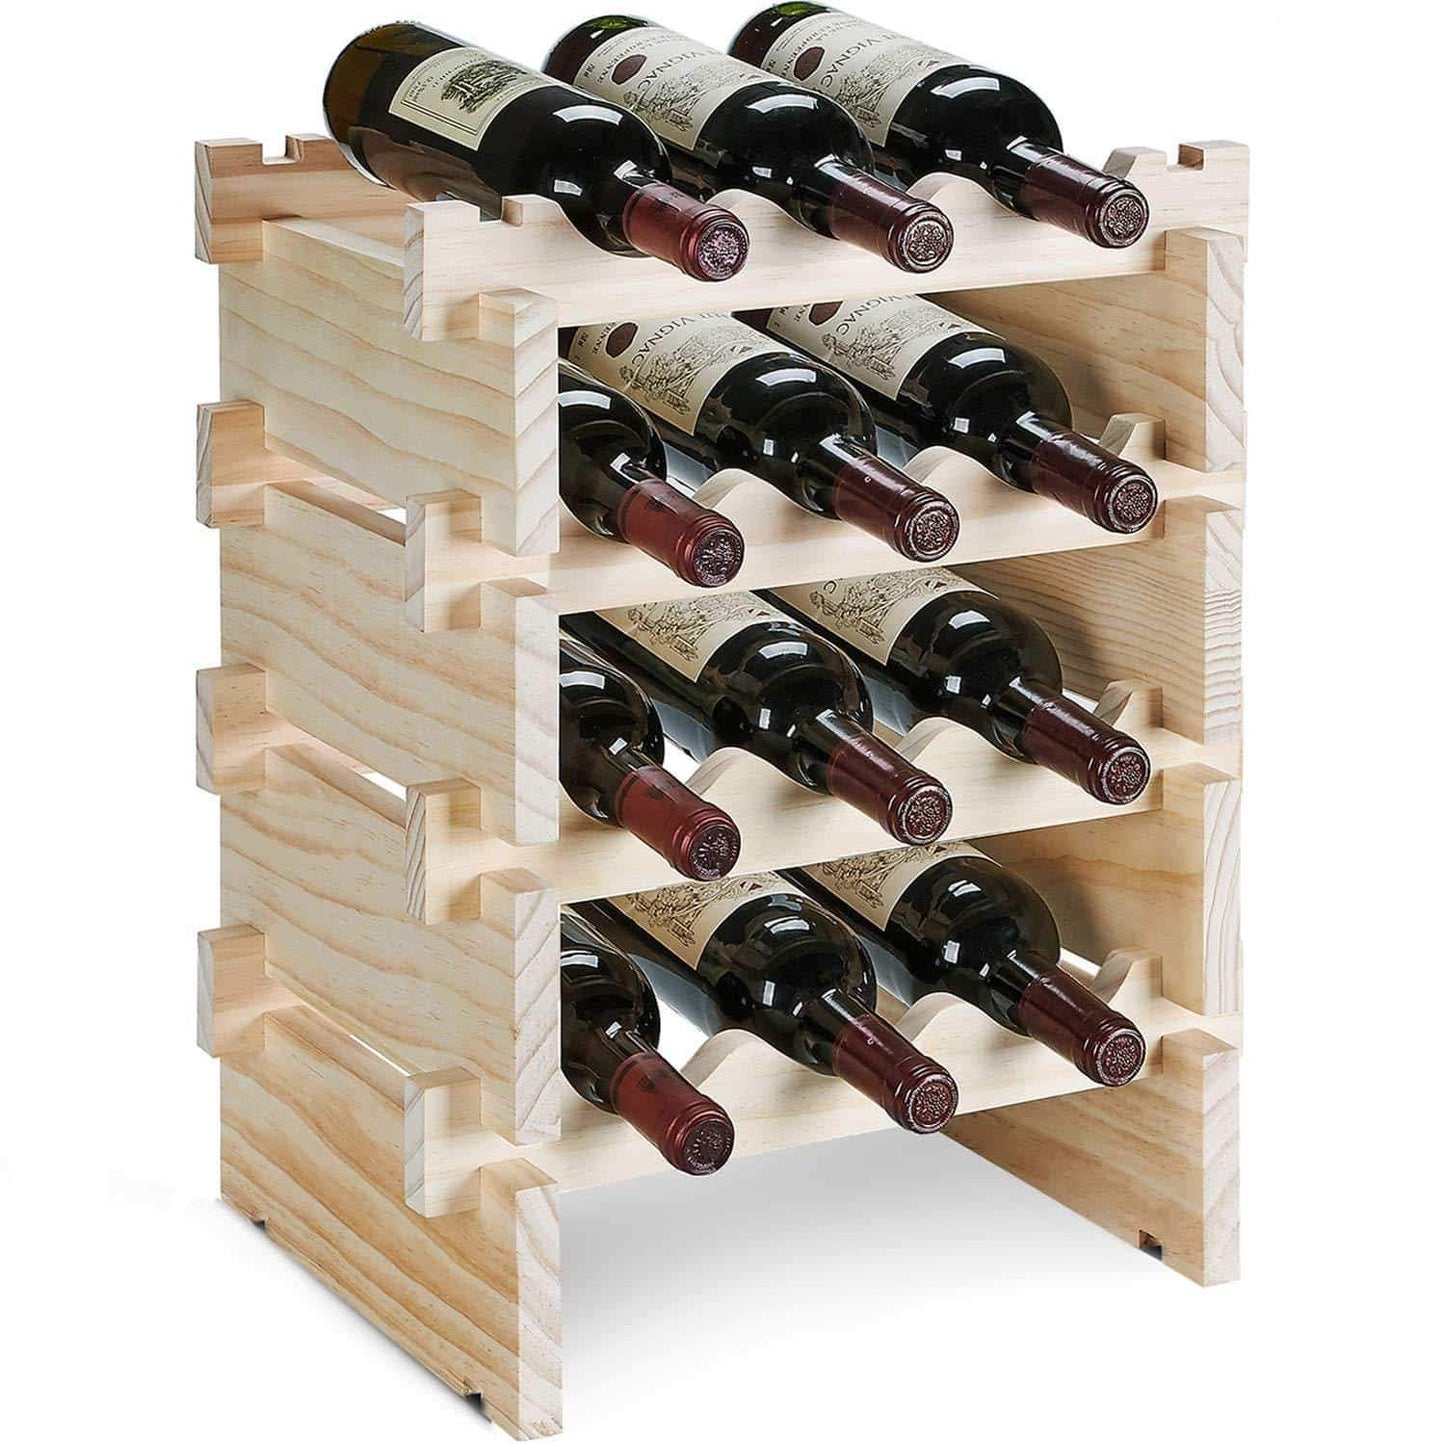 Kitchen defway wood wine rack countertop stackable storage wine holder 12 bottle display free standing natural wooden shelf for bar kitchen 4 tier natural wood